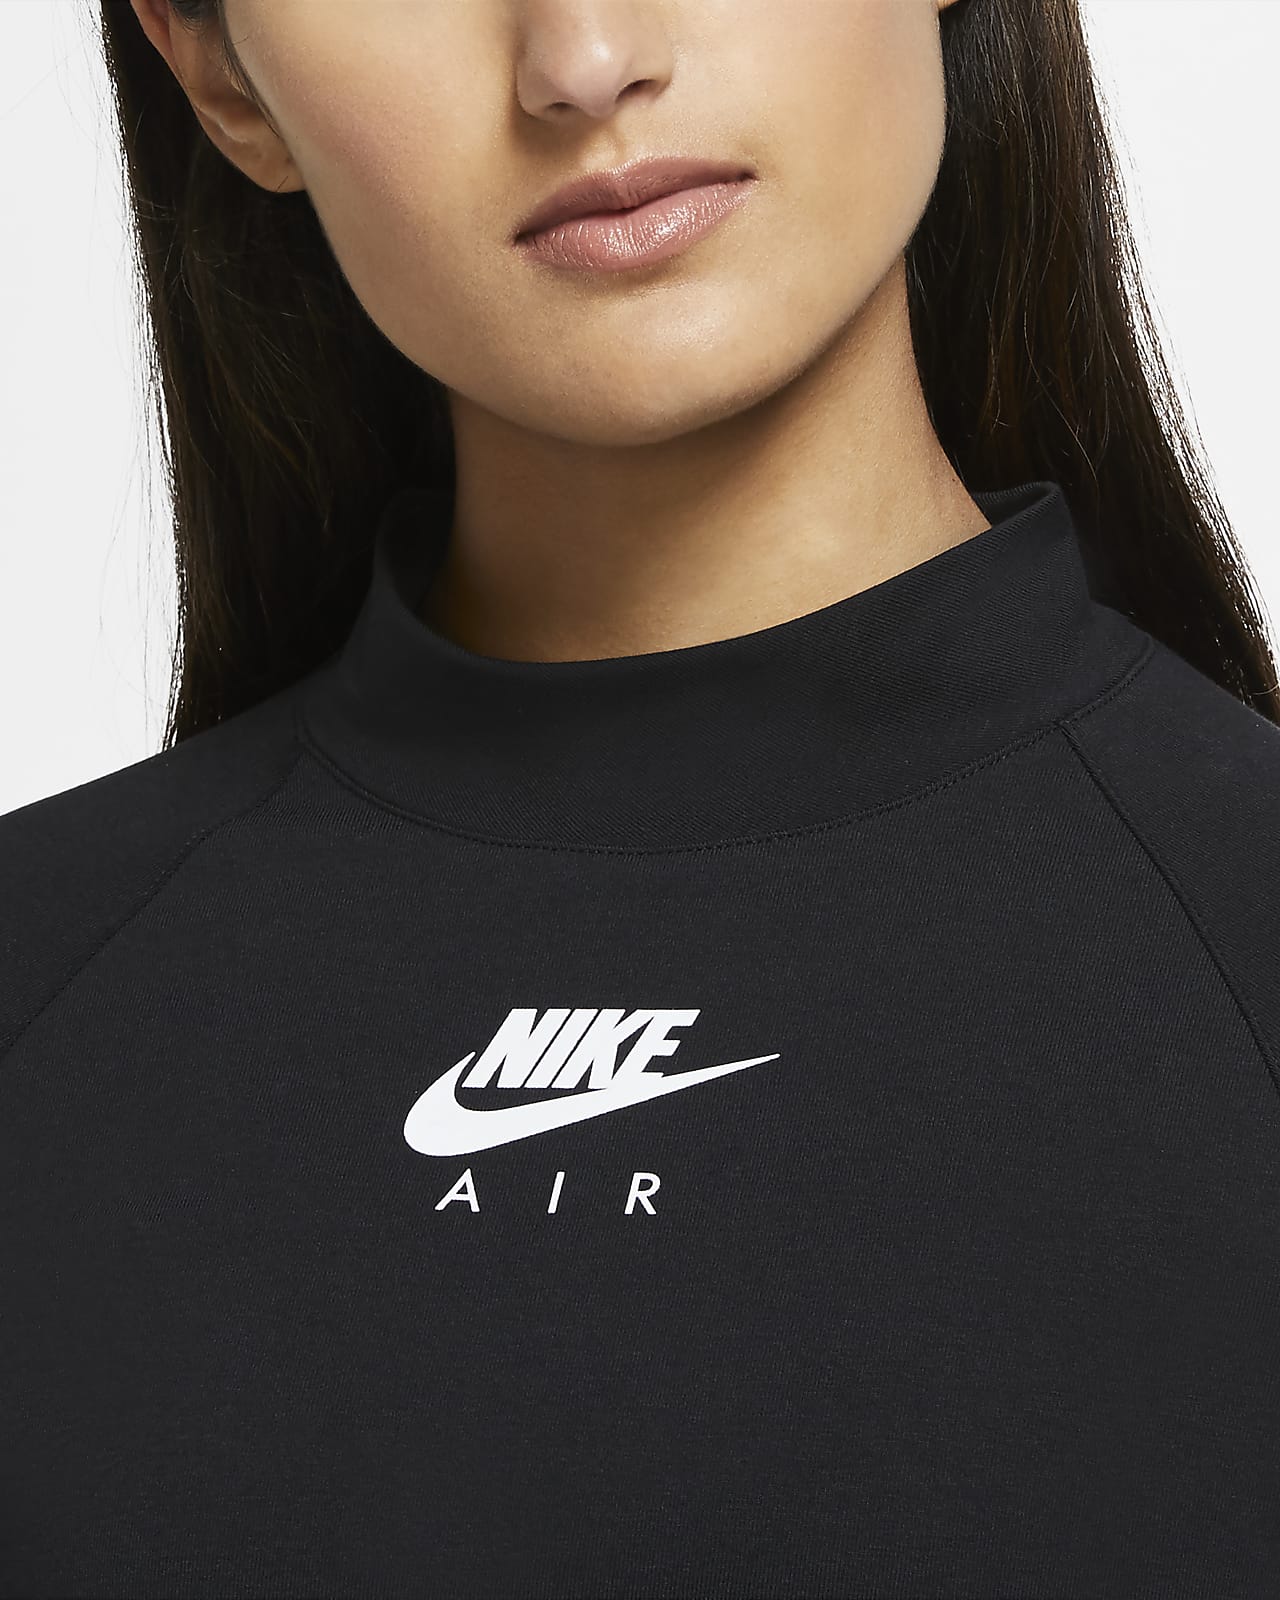 Nike Air Women's Long-Sleeve Top. Nike LU